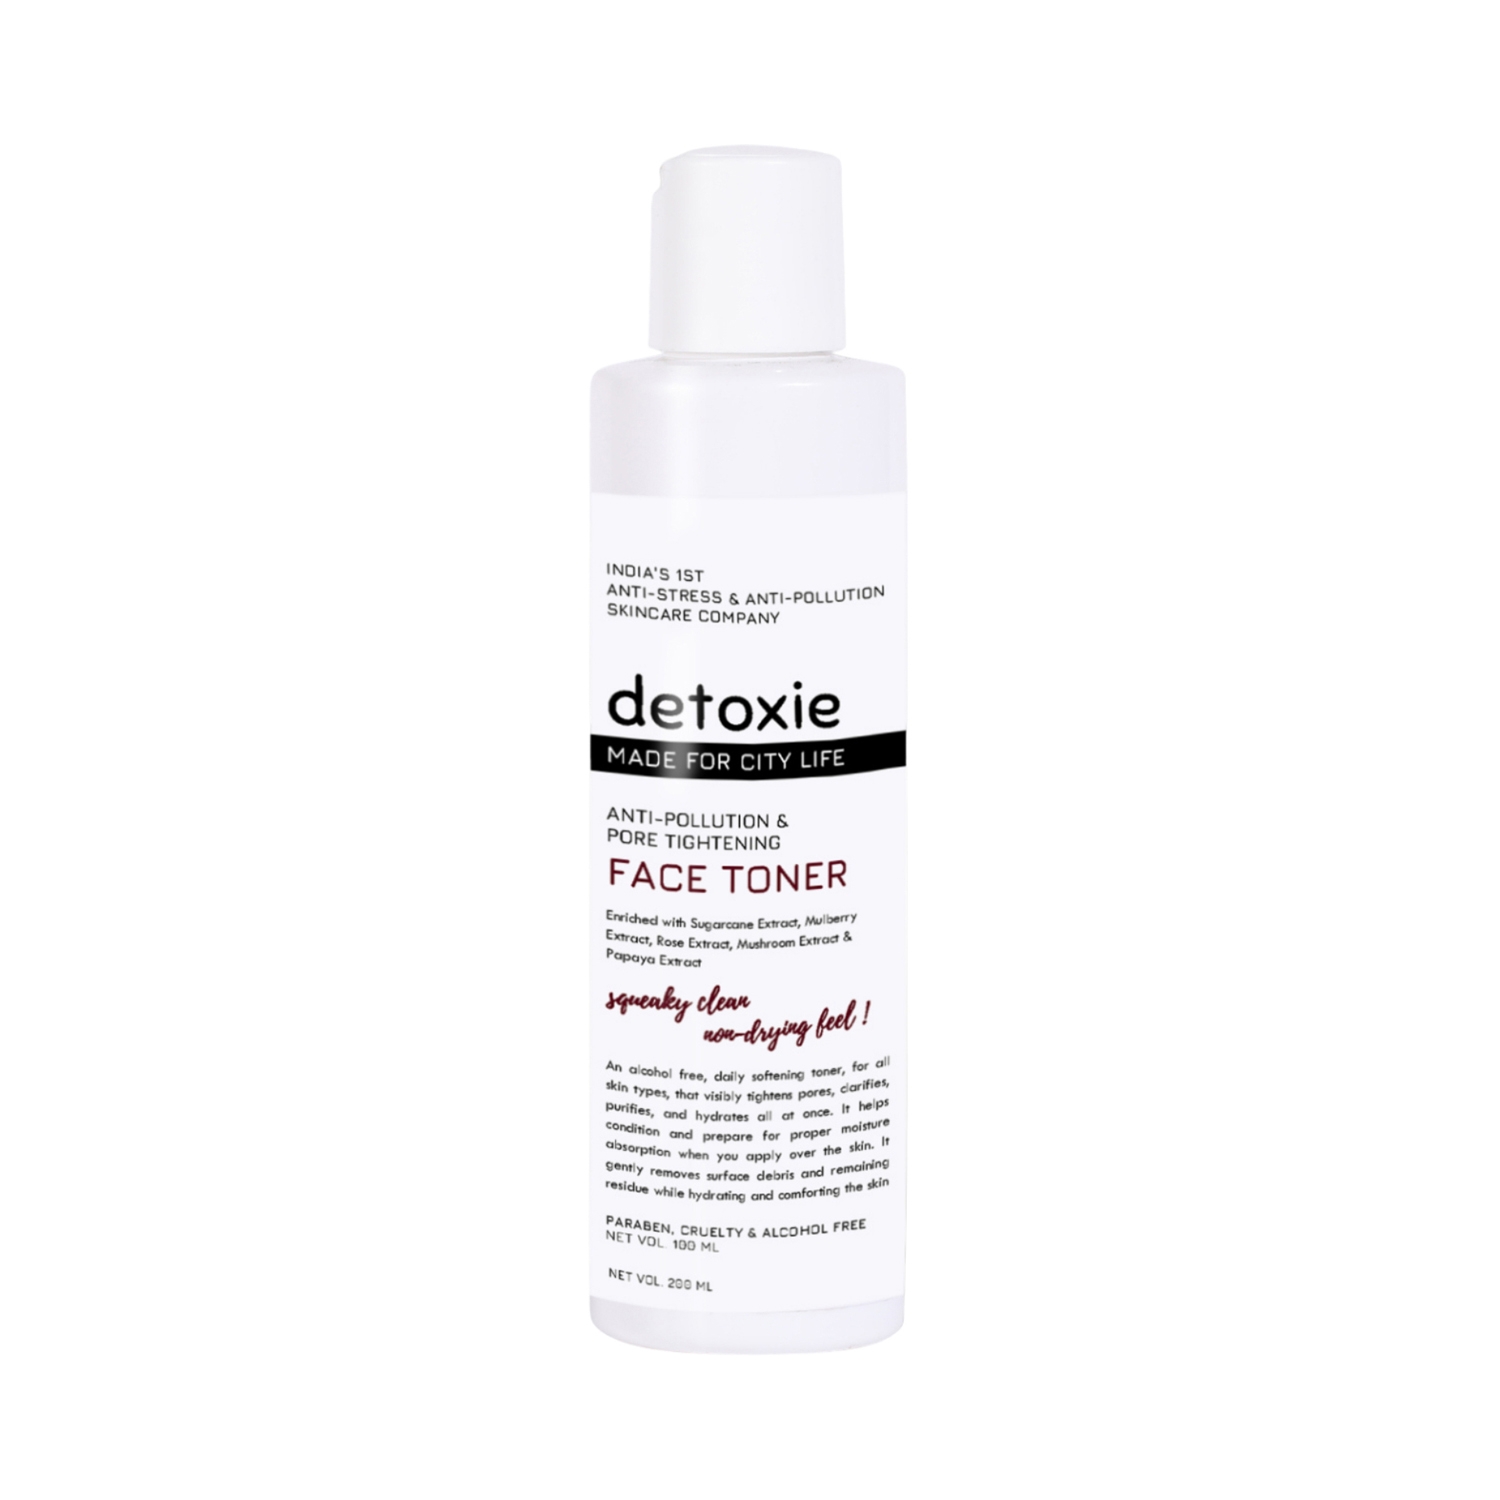 Detoxie Anti-Pollution & Pore Tightening Face Toner (100ml)